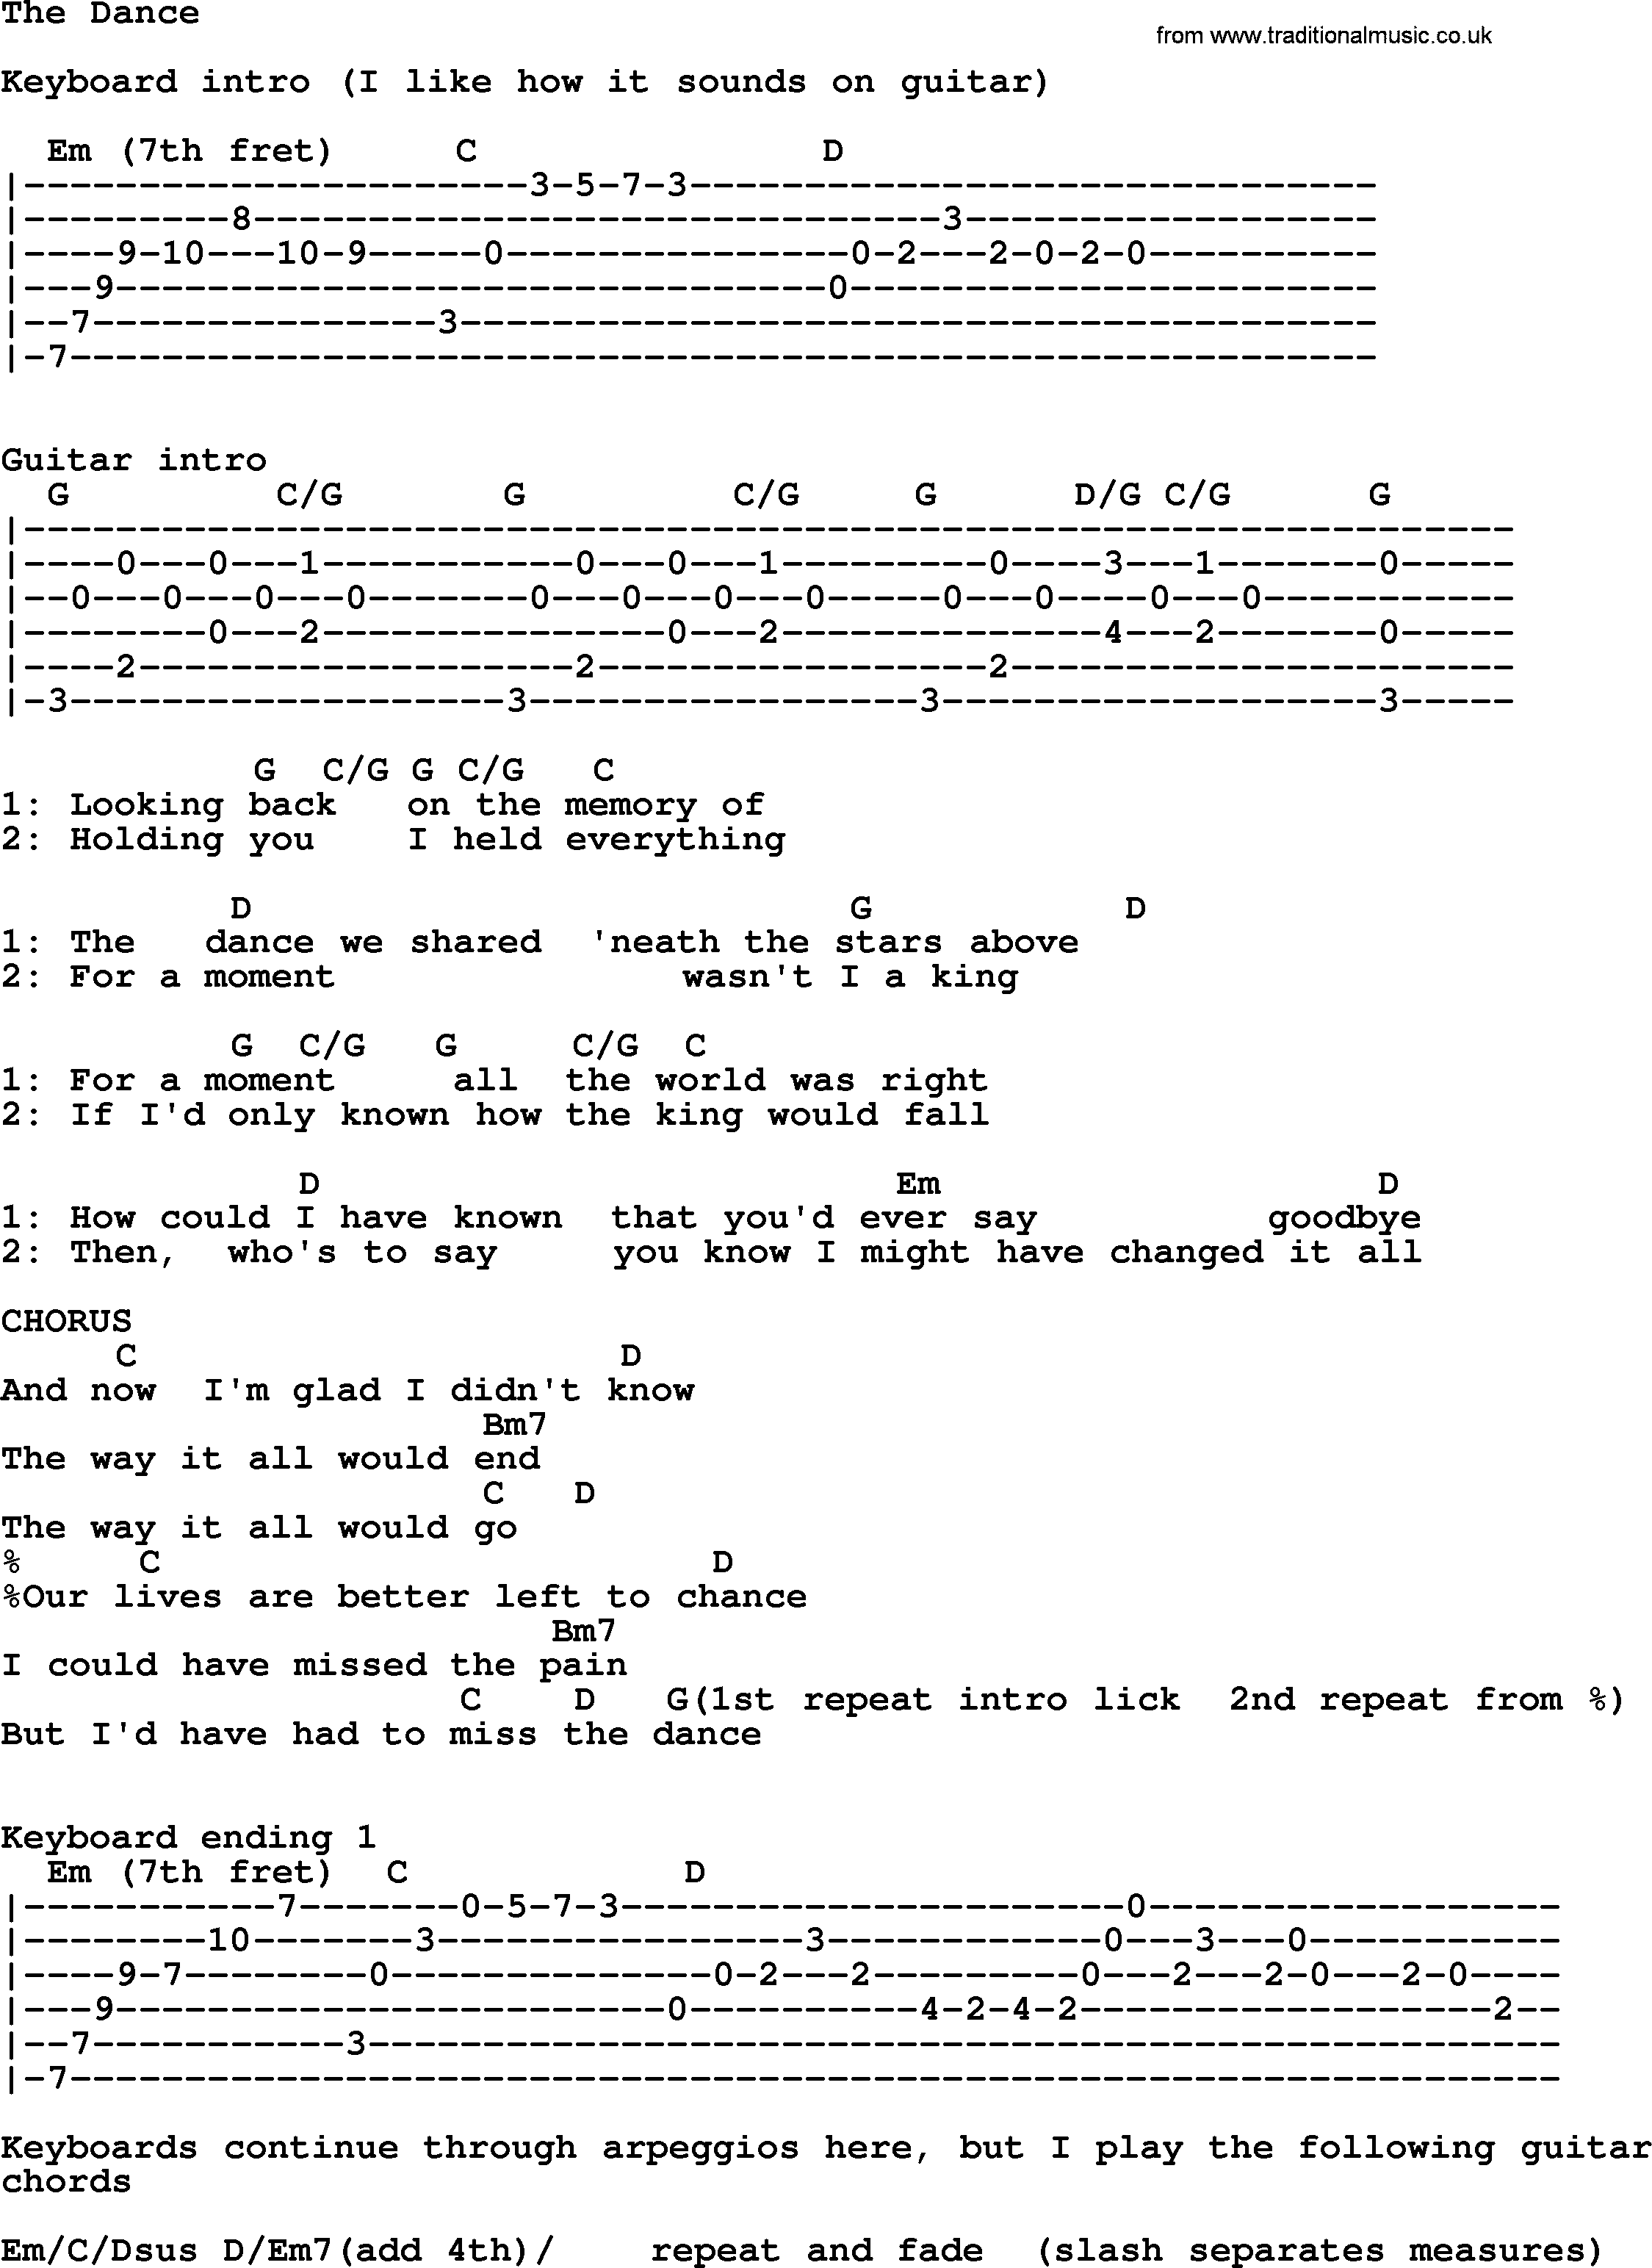 Garth Brooks song: The Dance, lyrics and chords